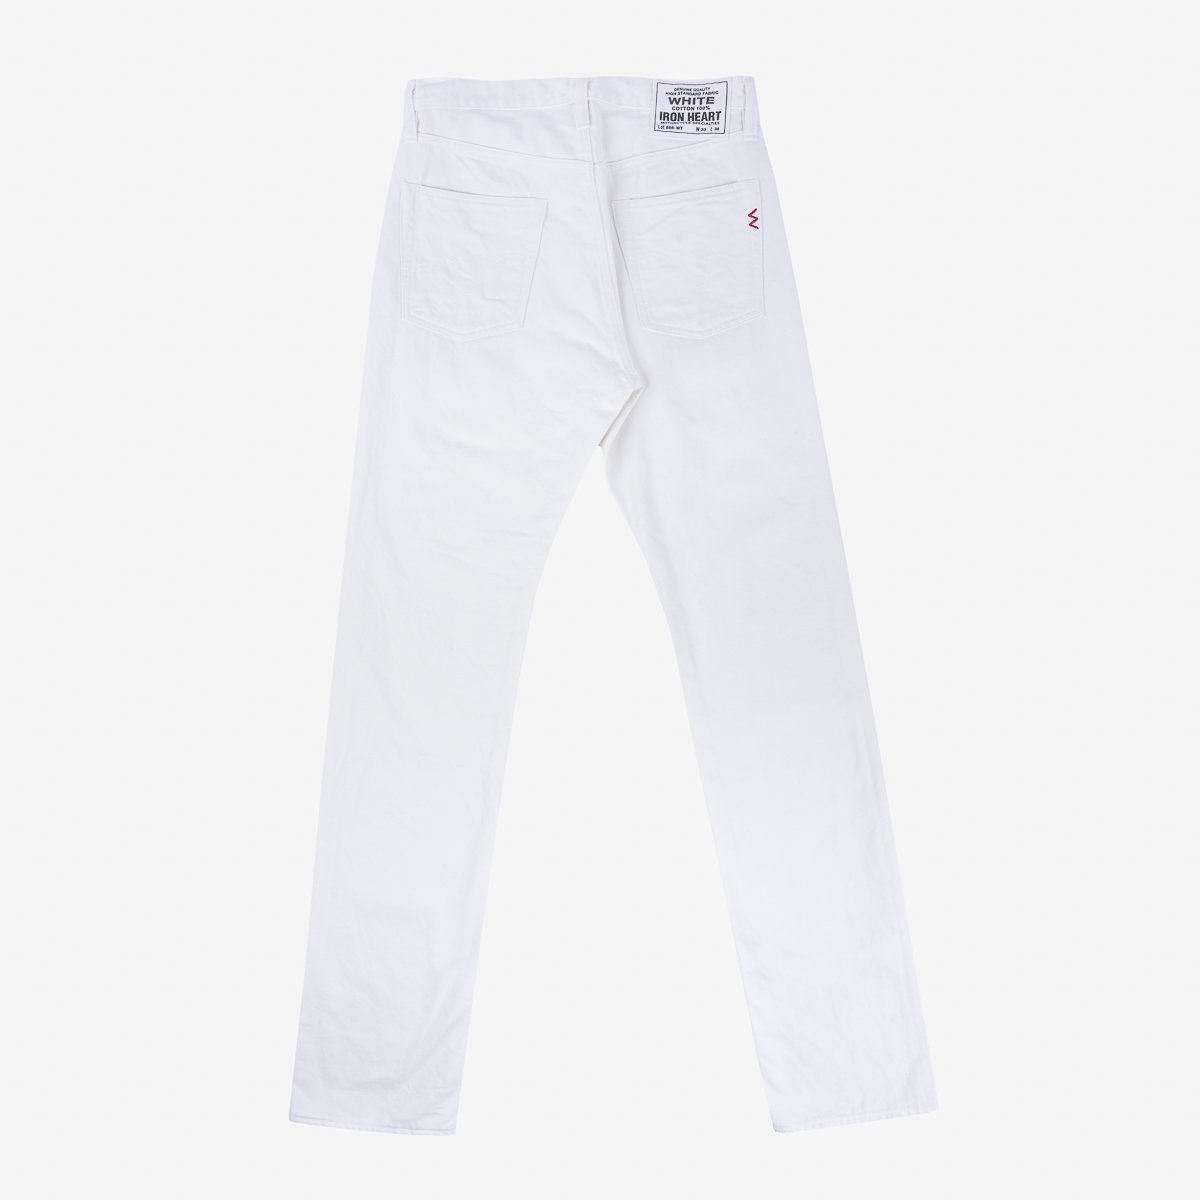 IH-888-WT 13.5oz Denim Medium/High Rise Tapered Cut Jeans - White - 5